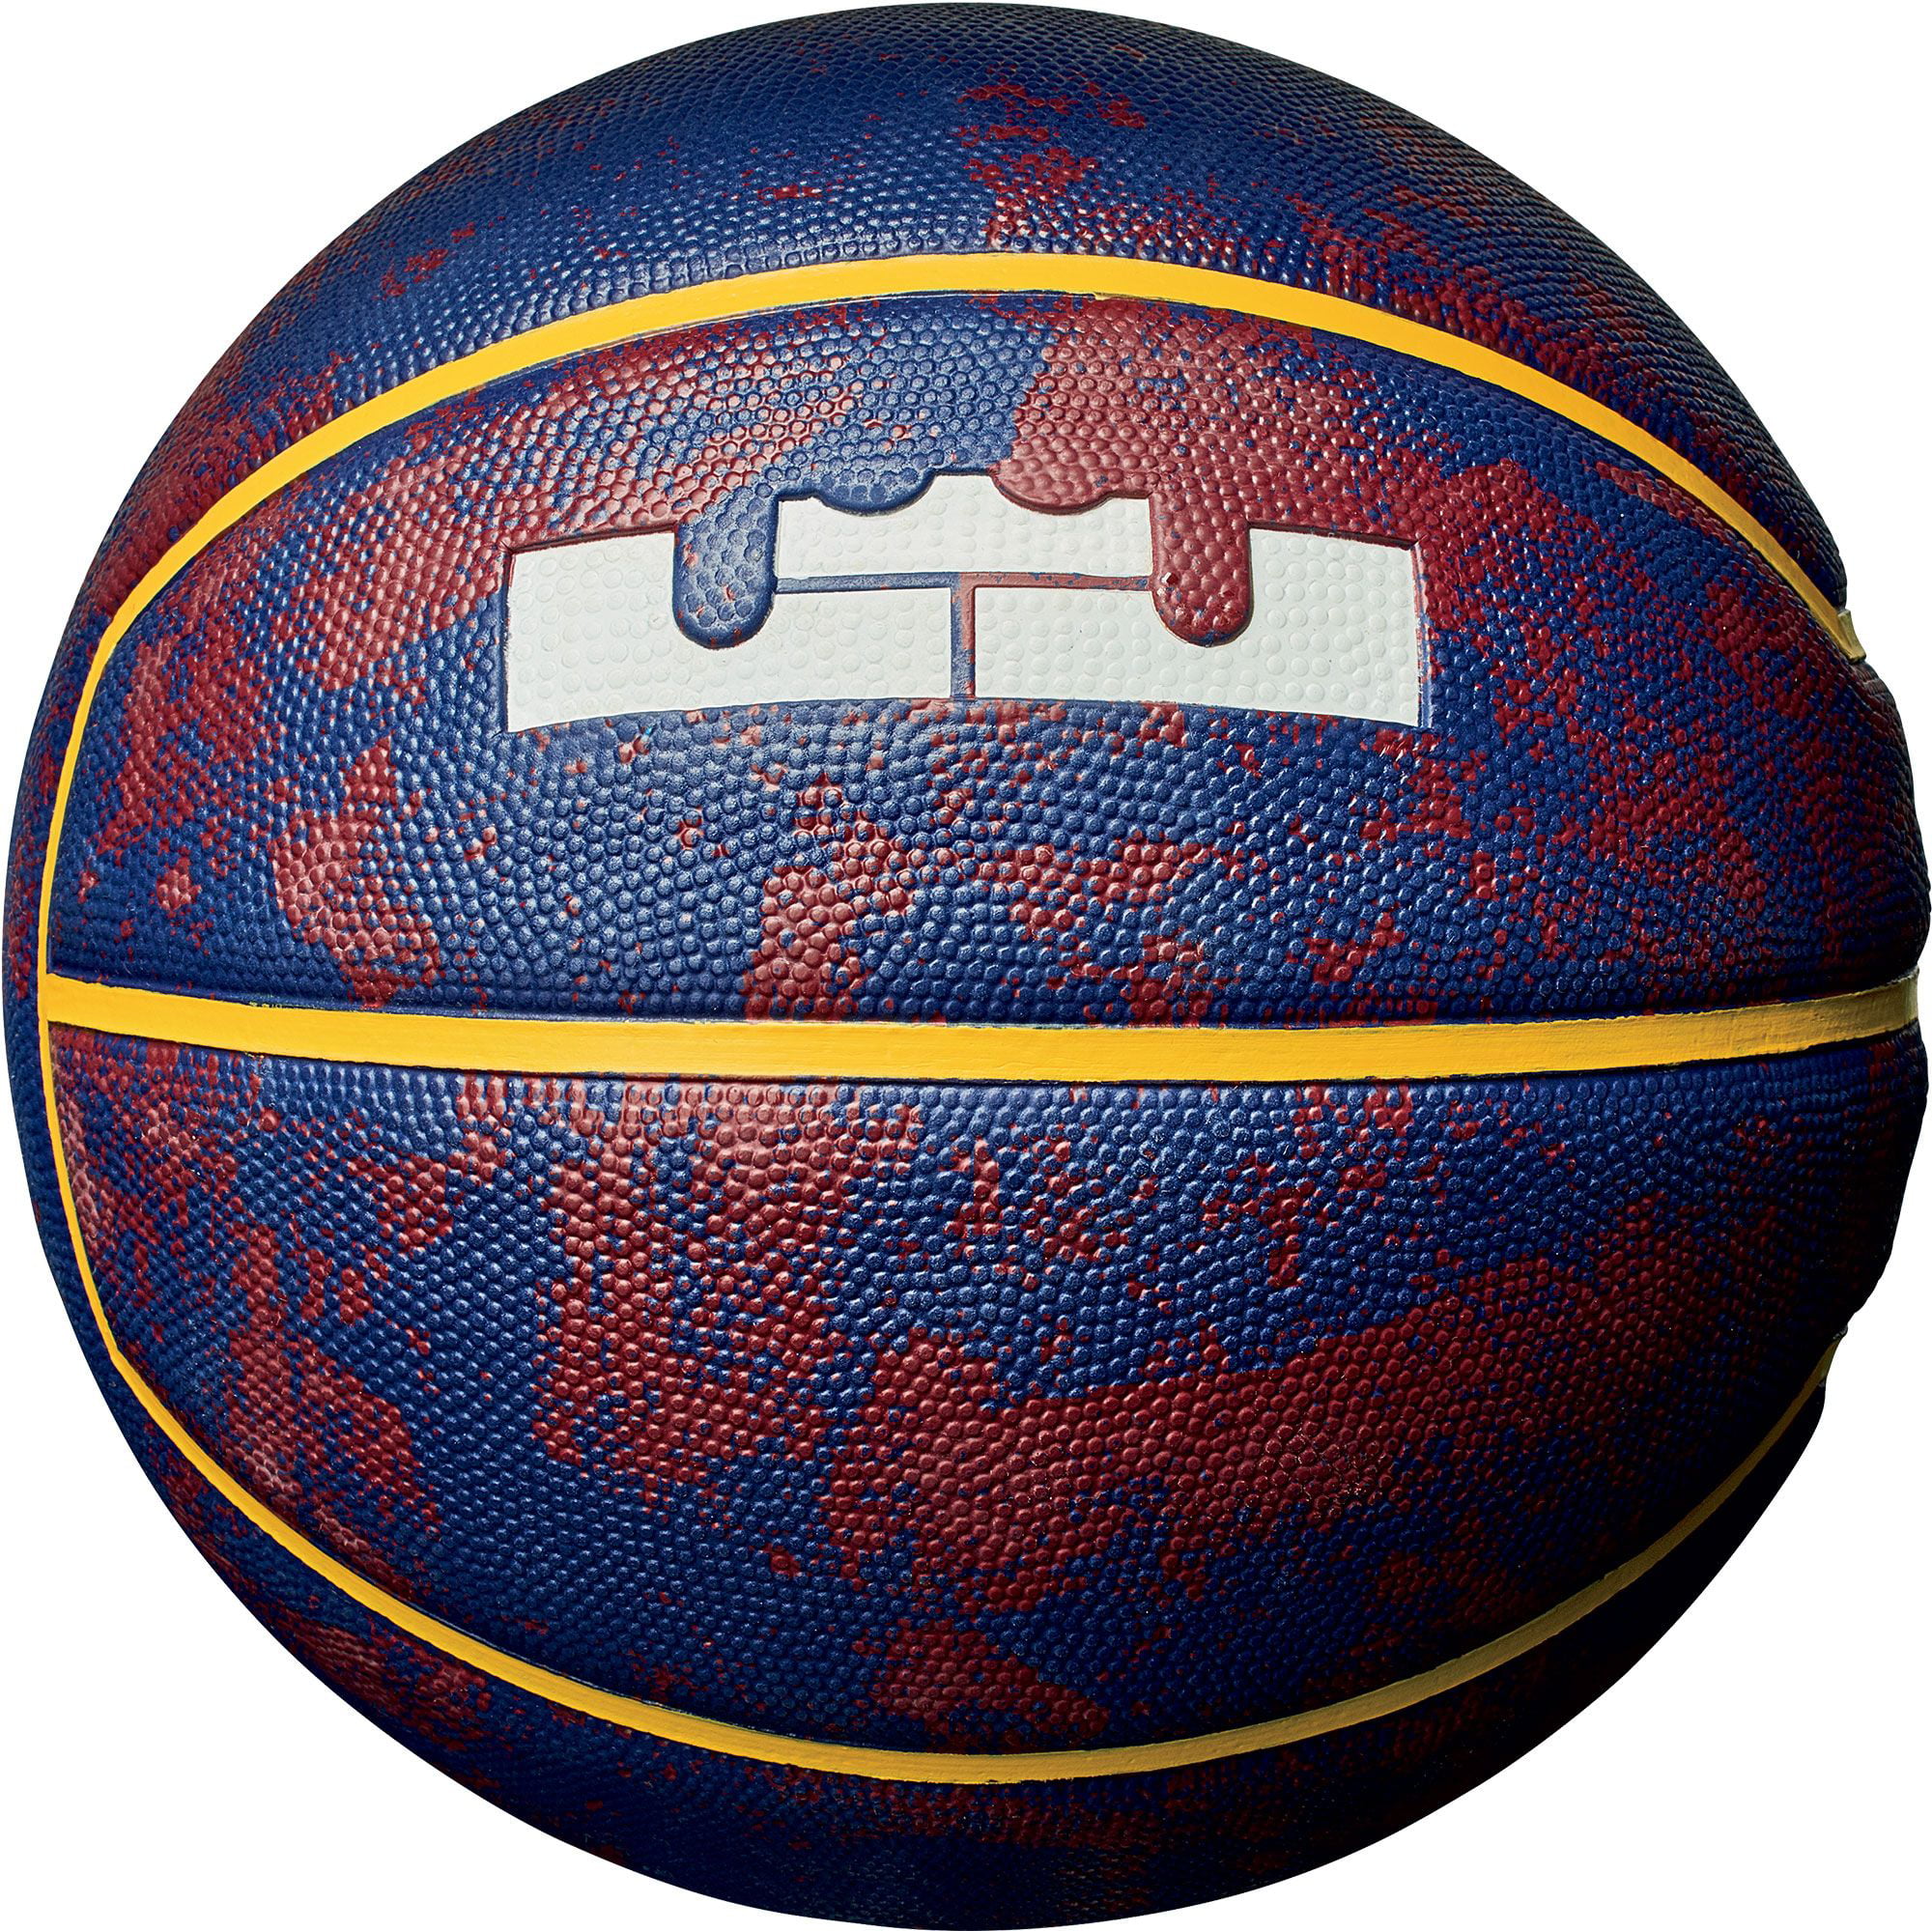 Nike LeBron Playground Basketball (28.5 